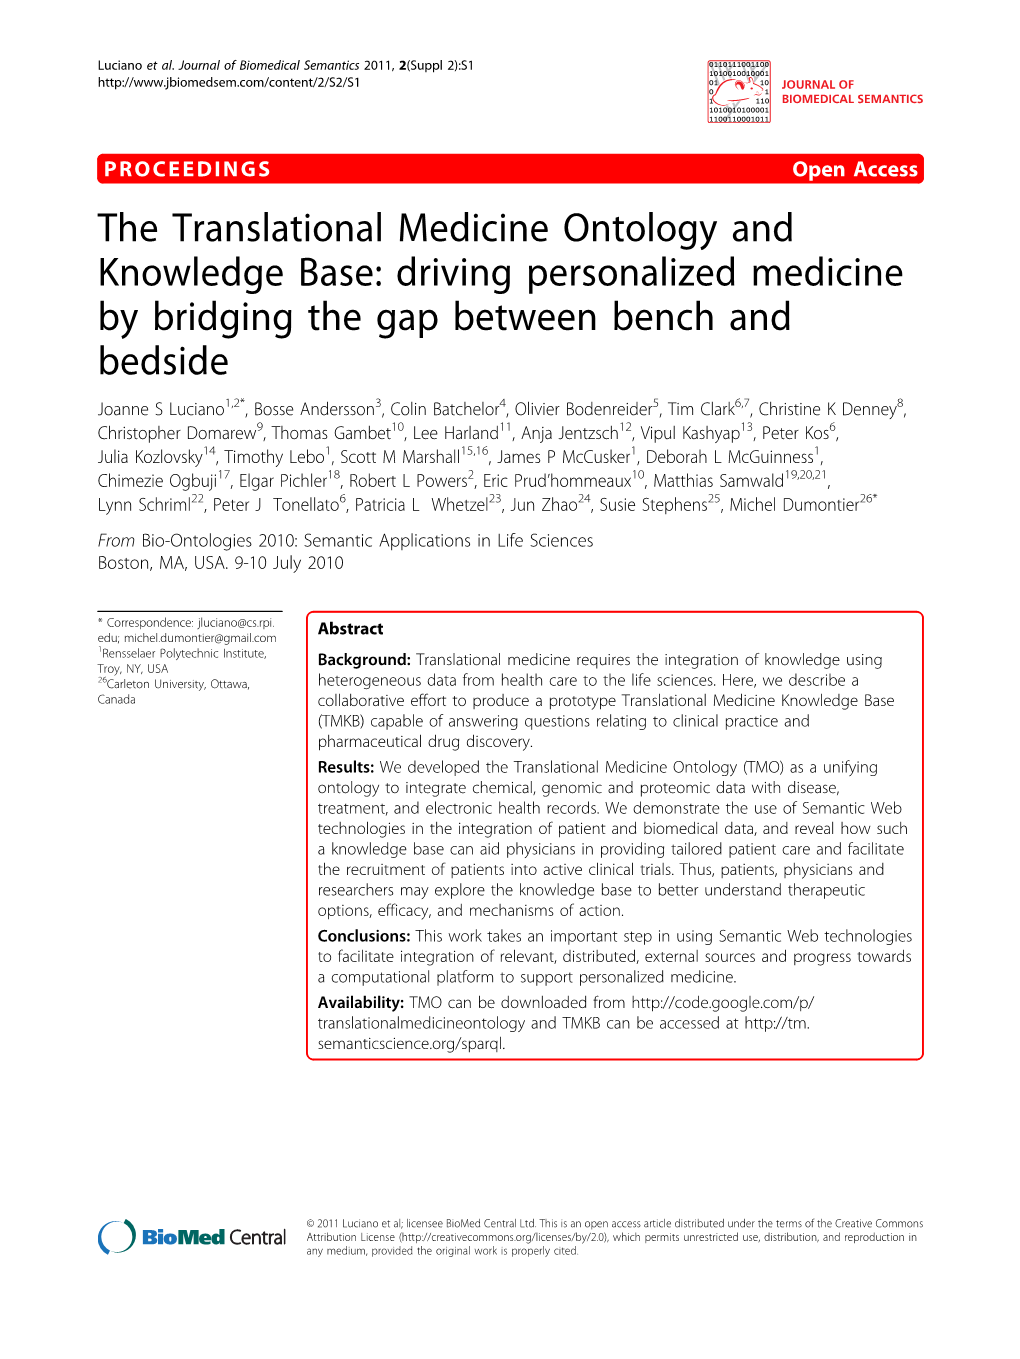 The Translational Medicine Ontology and Knowledge Base